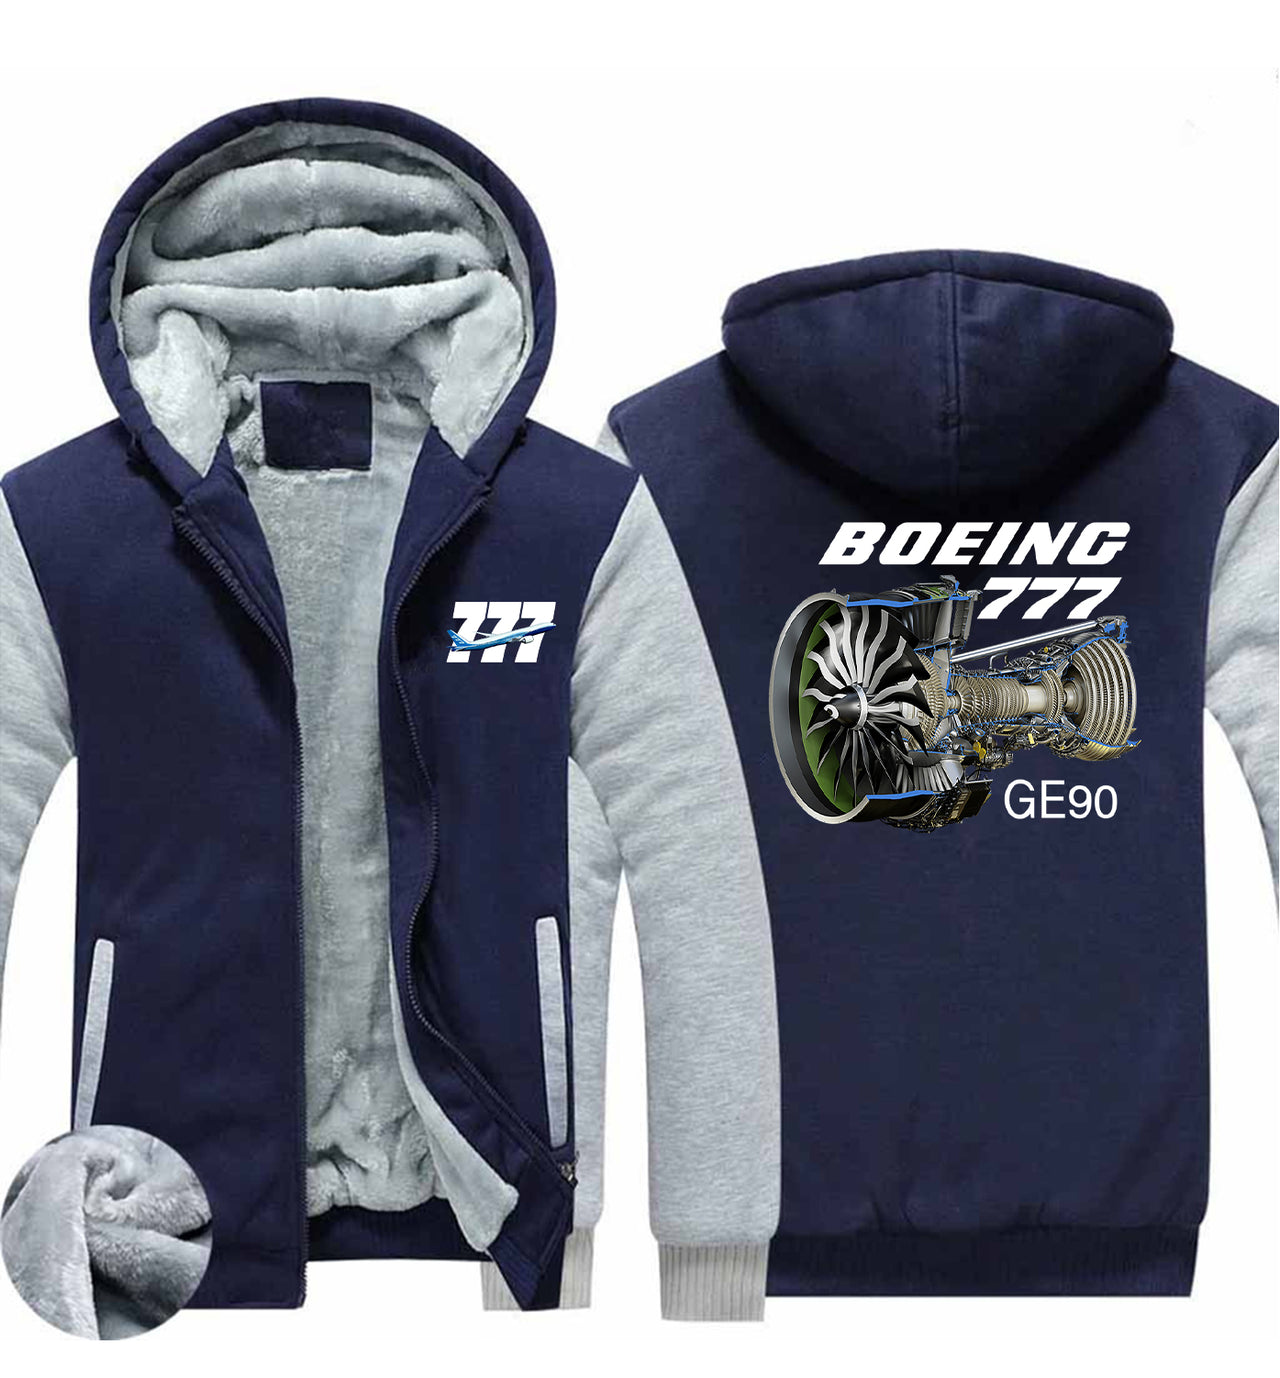 Boeing 777 & GE90 Engine Designed Zipped Sweatshirts